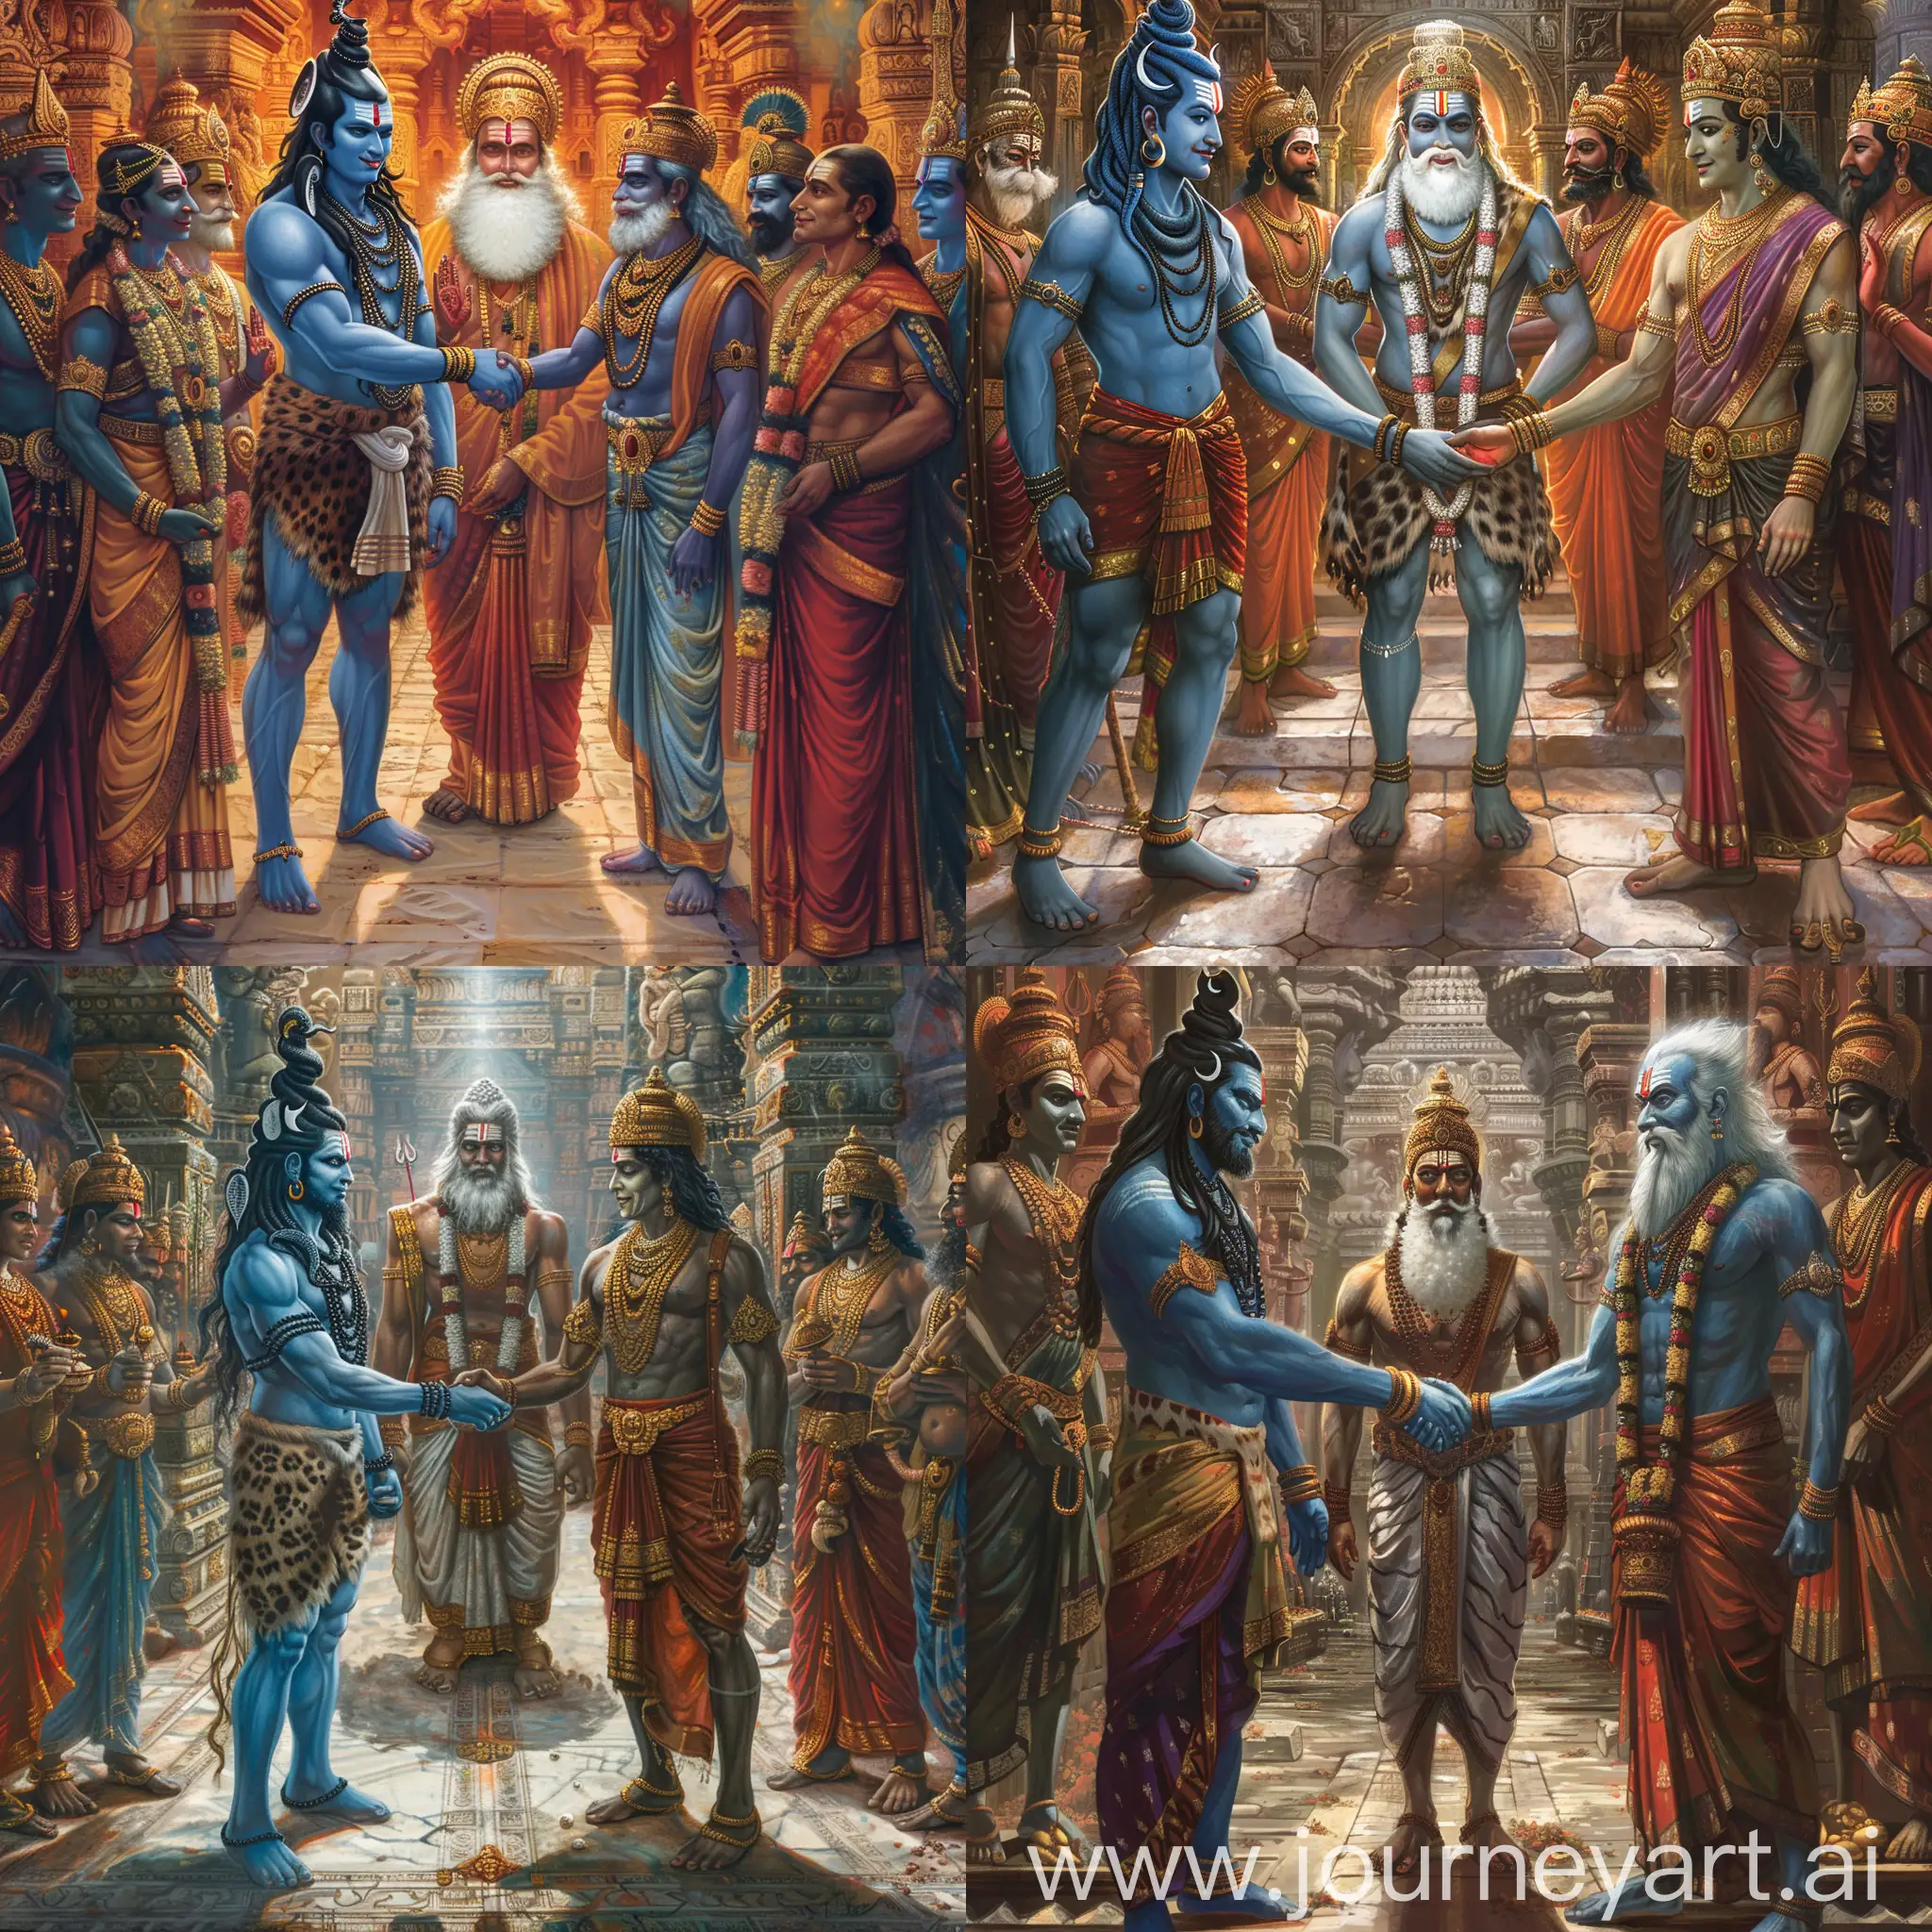 Divine-Encounter-Shiva-and-Vishnu-Handshake-in-Ancient-Temple